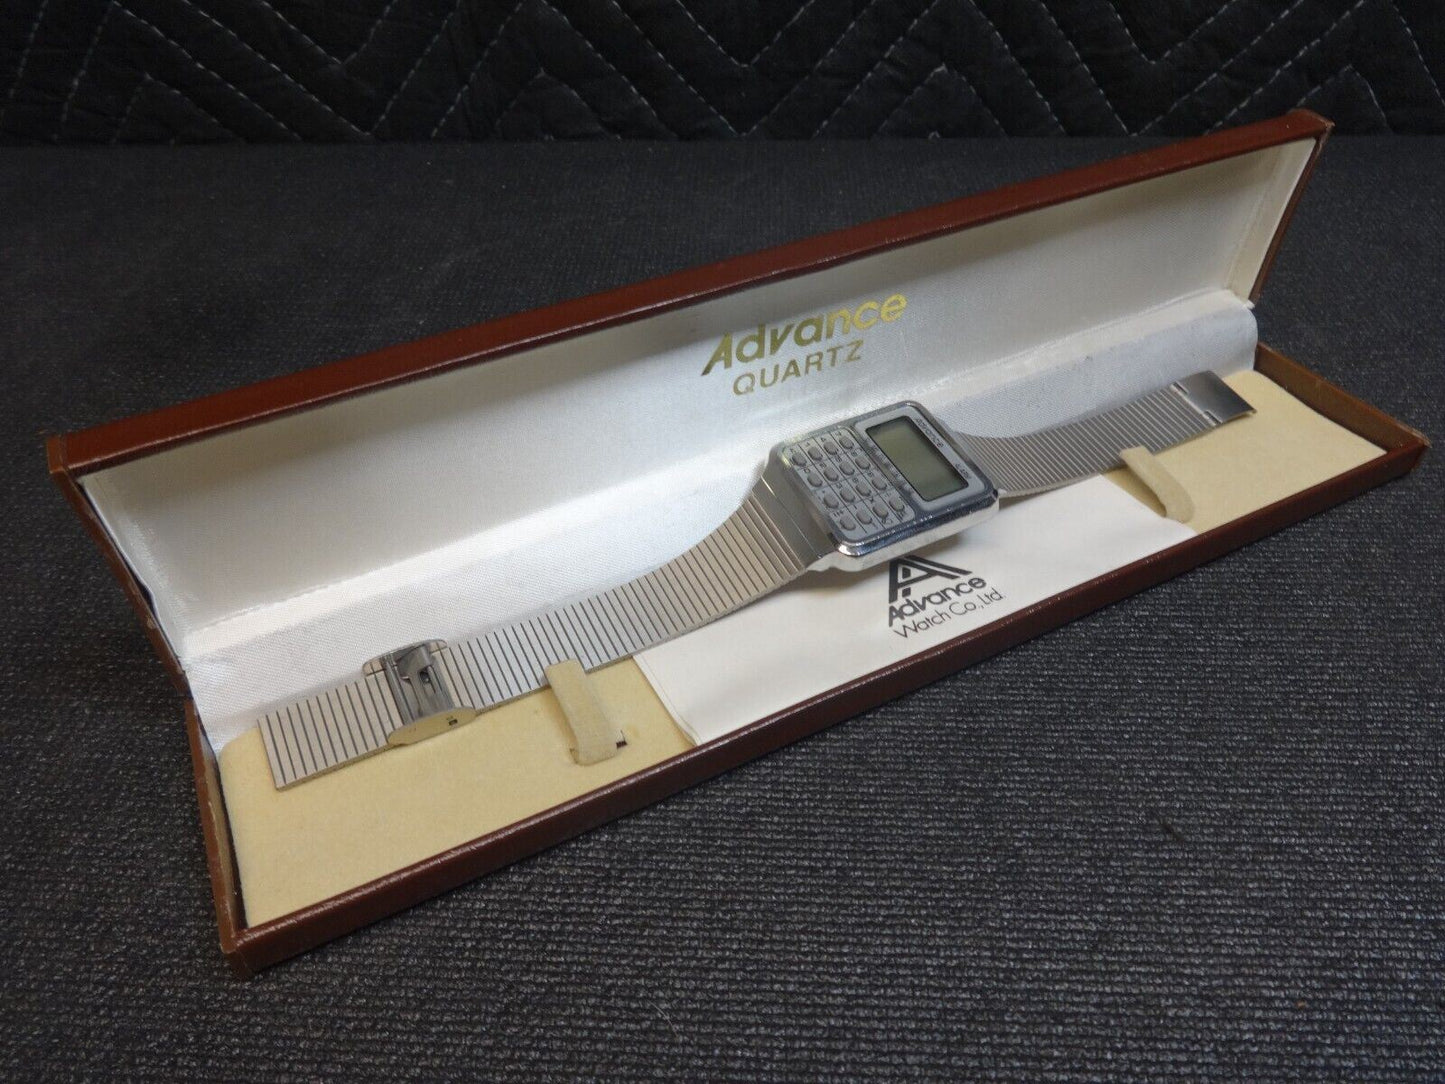 Vintage 1980s ADVANCE Mens Calculator Quartz Watch in original Box with Paper